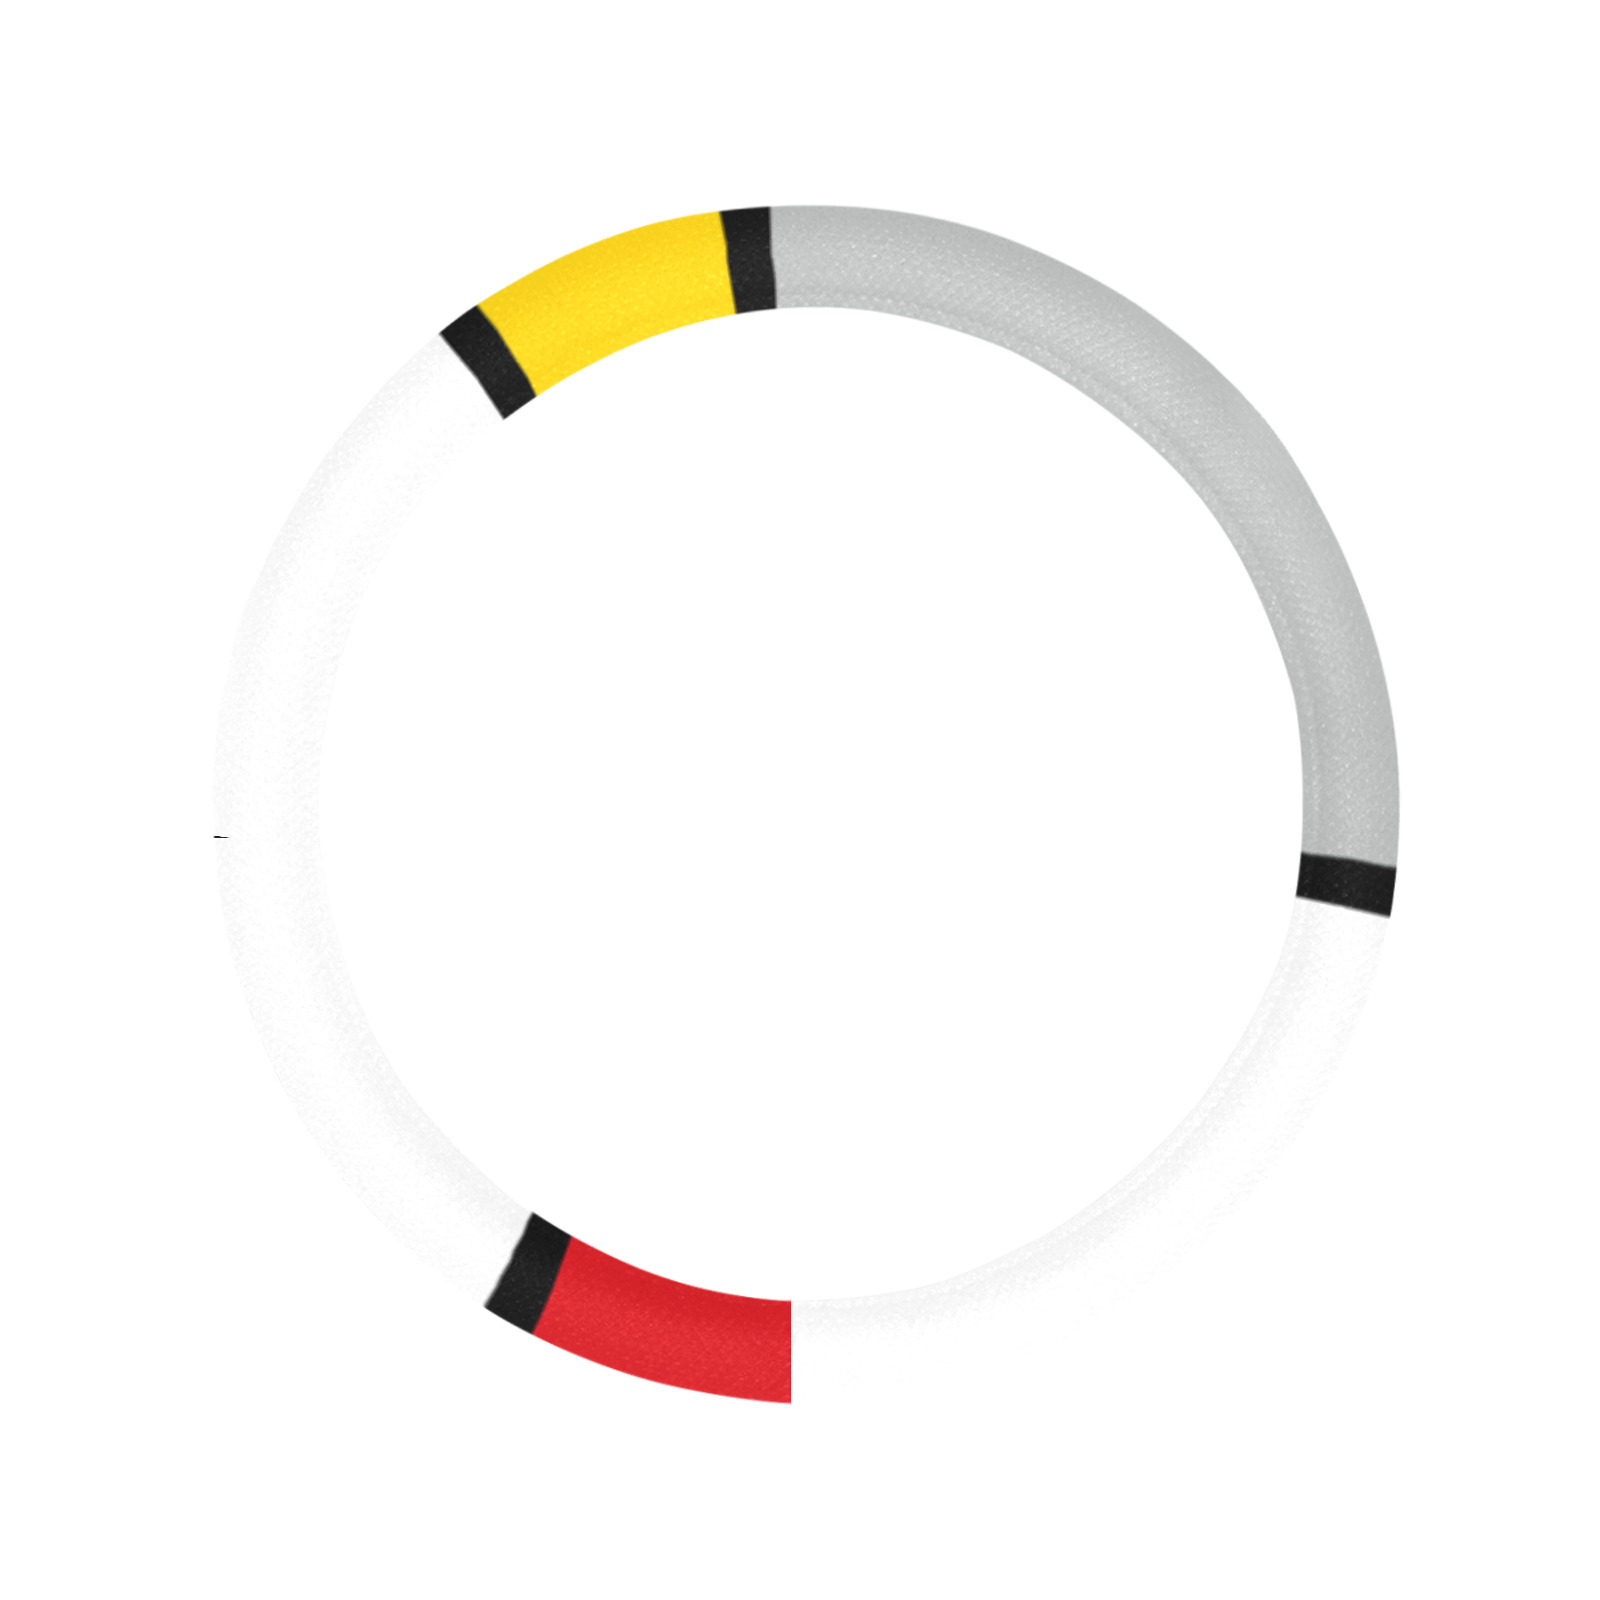 Geometric Retro Mondrian Style Color Composition Steering Wheel Cover with Anti-Slip Insert